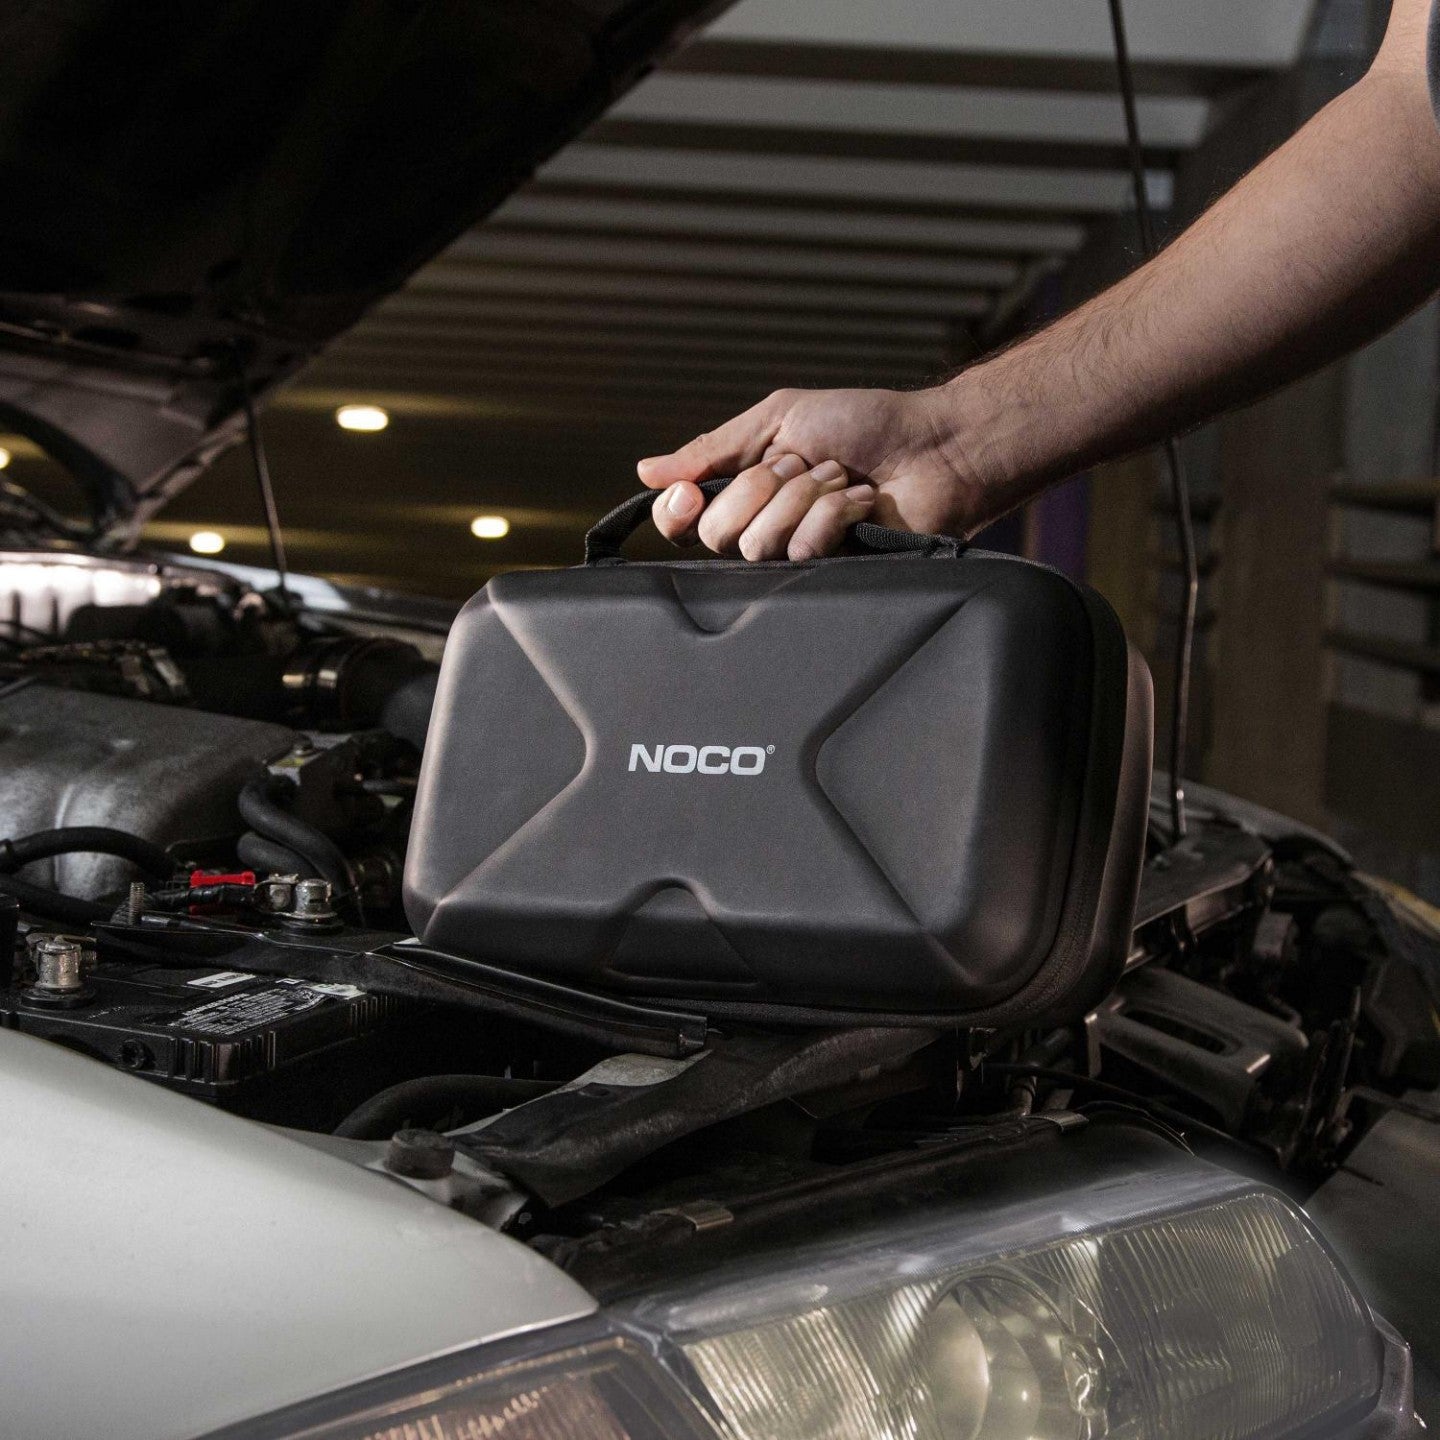 NOCO GBC014 EVA Protective Case For Boost HD - MPR Tools & Equipment